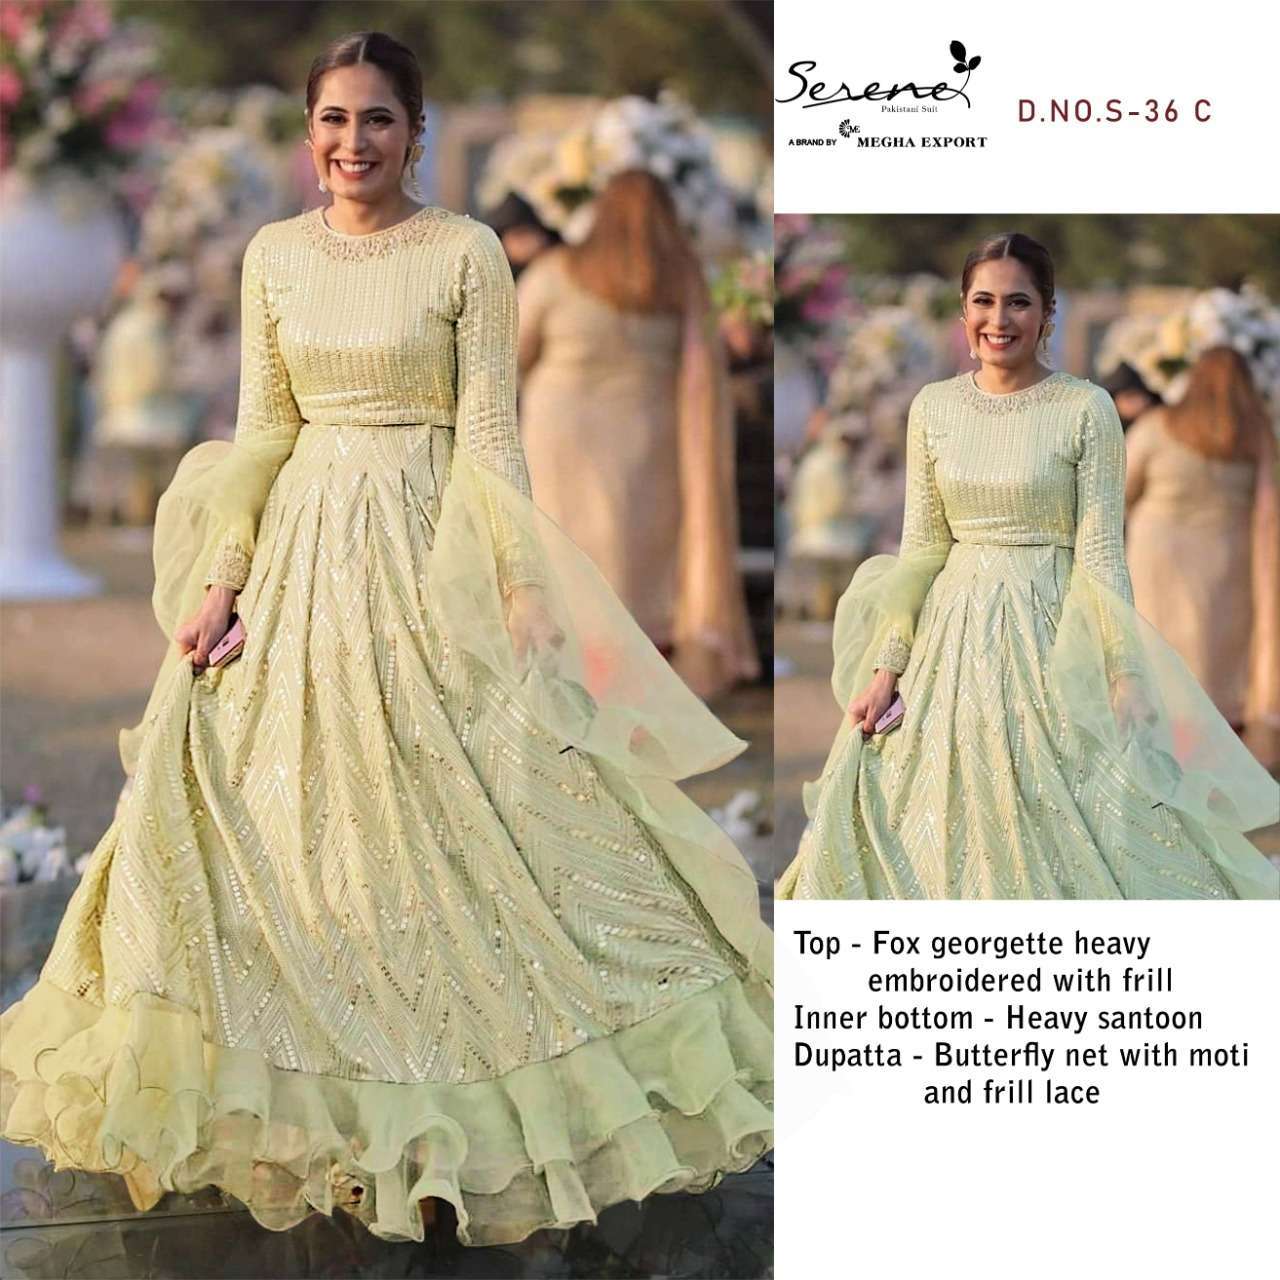 Serene Present Feza Designer Anarkali Suit In Wholesale Price At Saidharanx